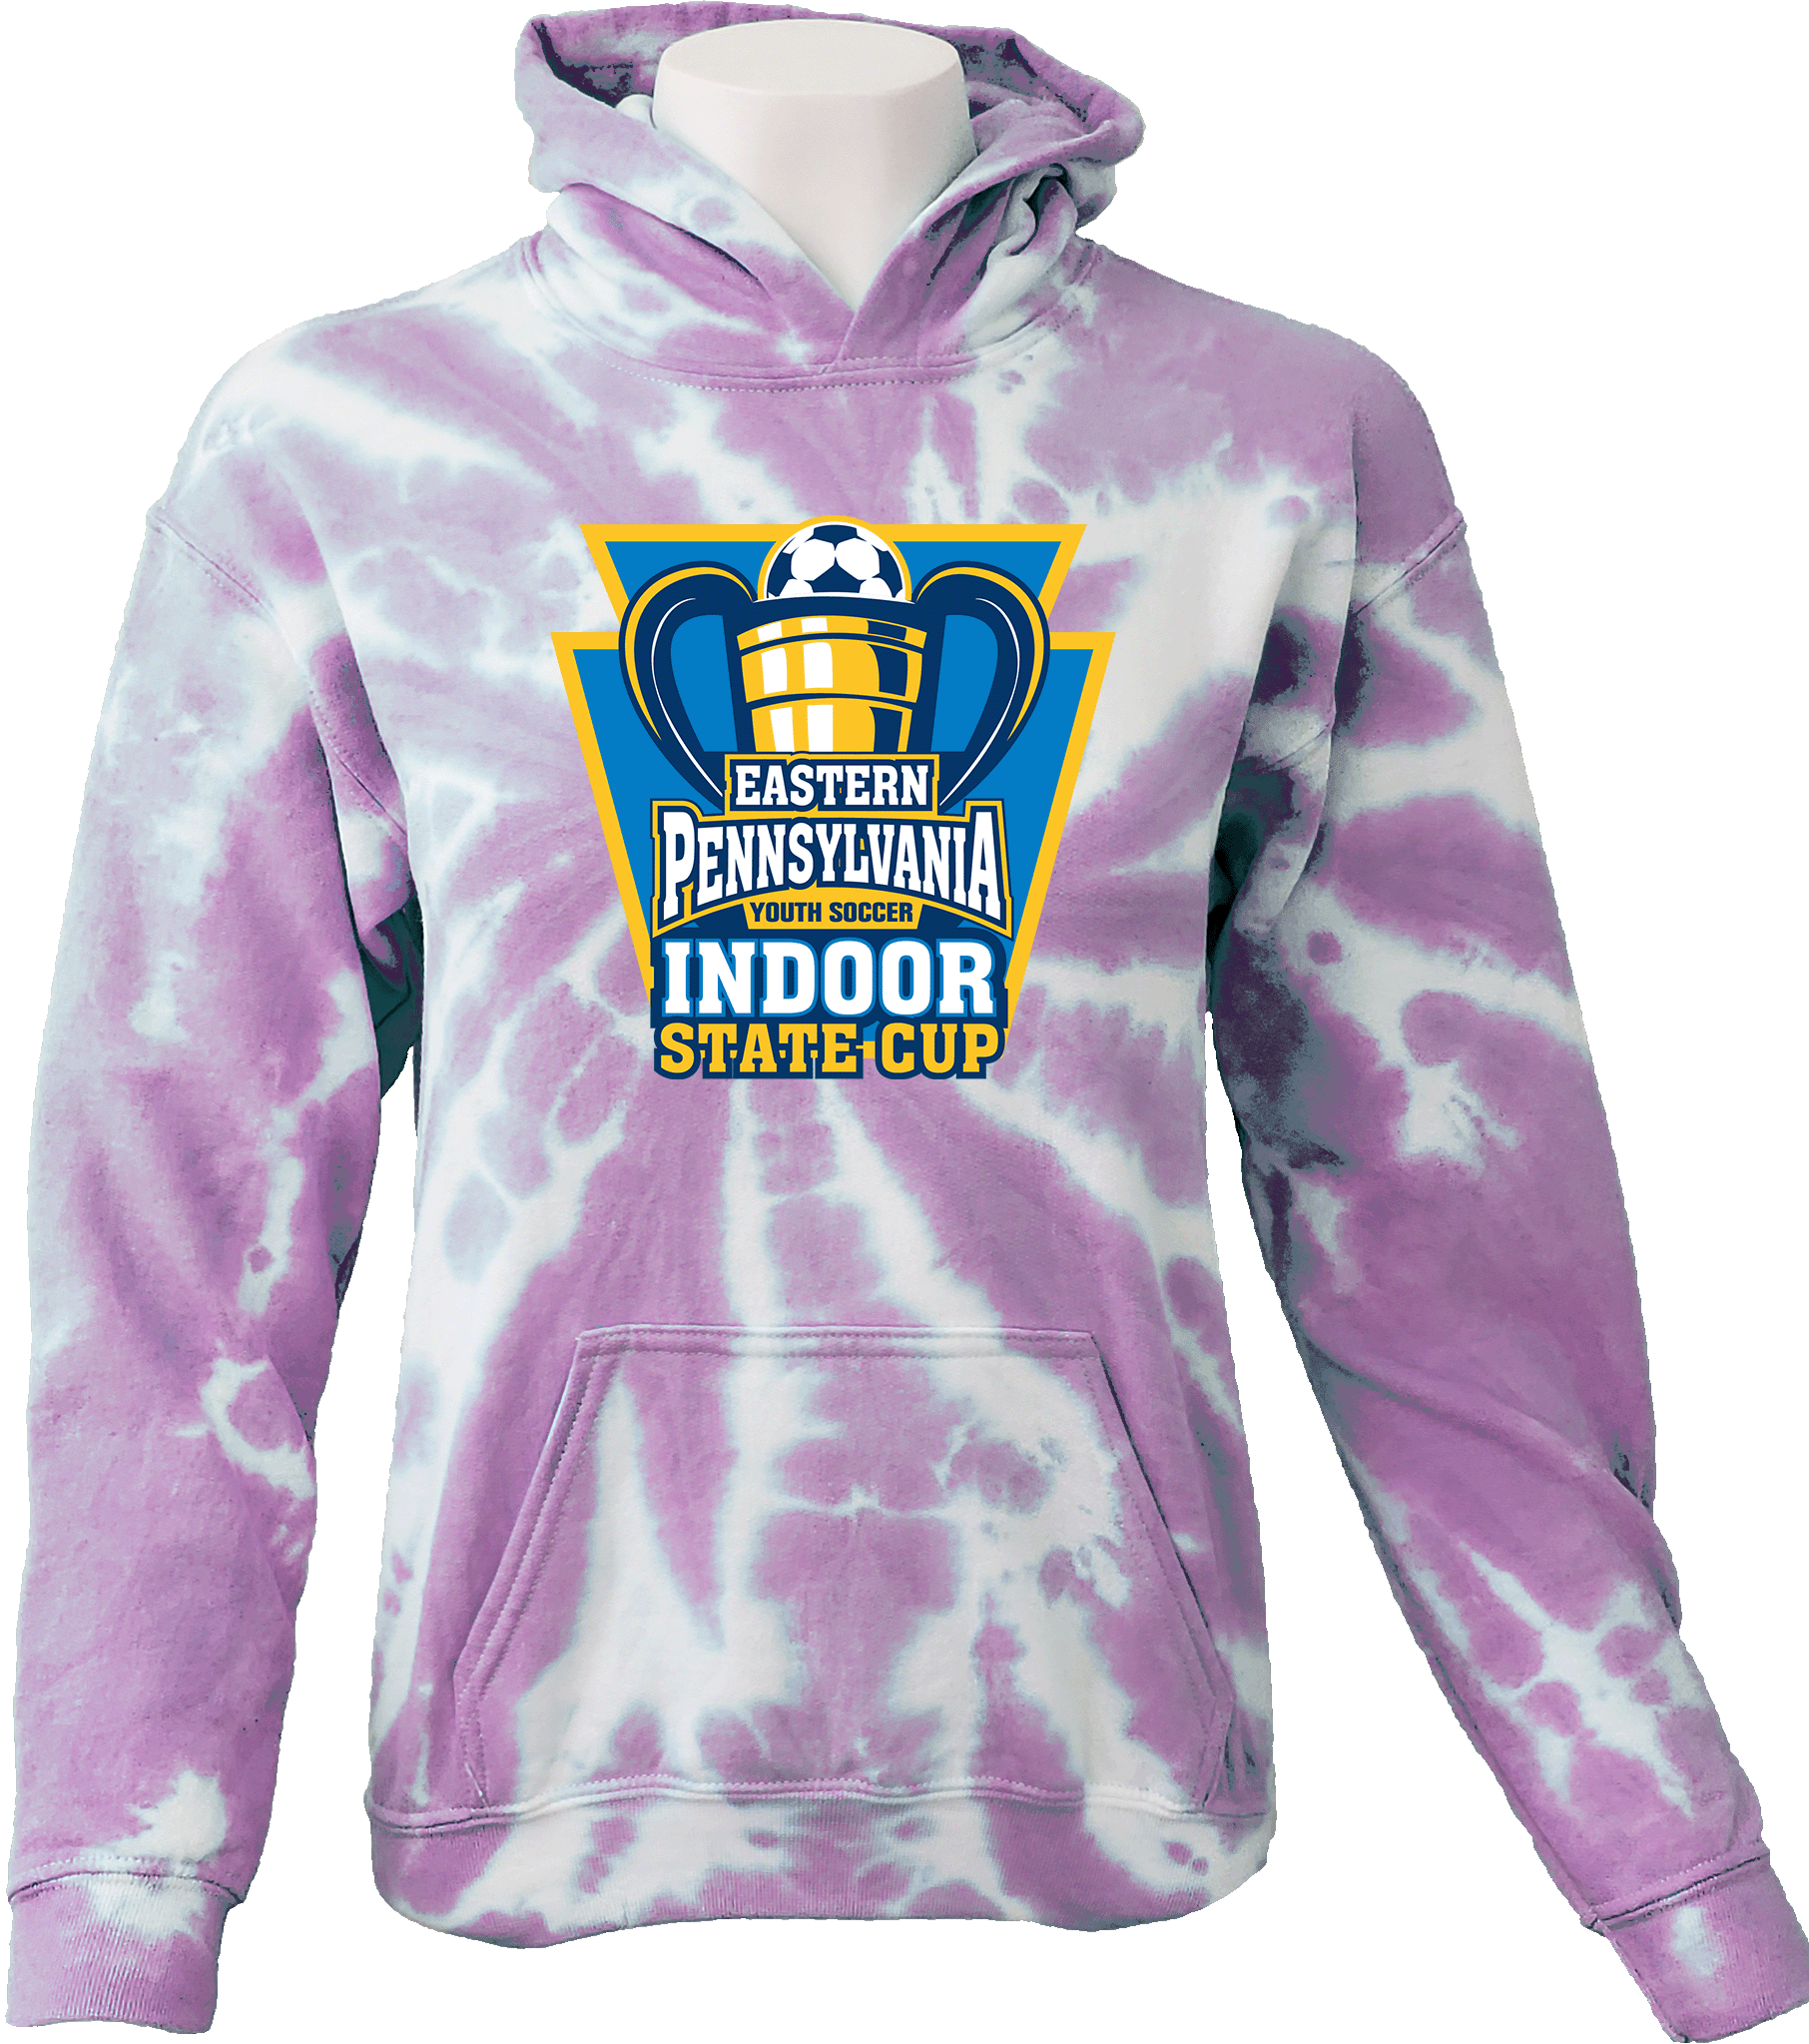 Tie-Dye Hoodies - EPA Indoor State Cup